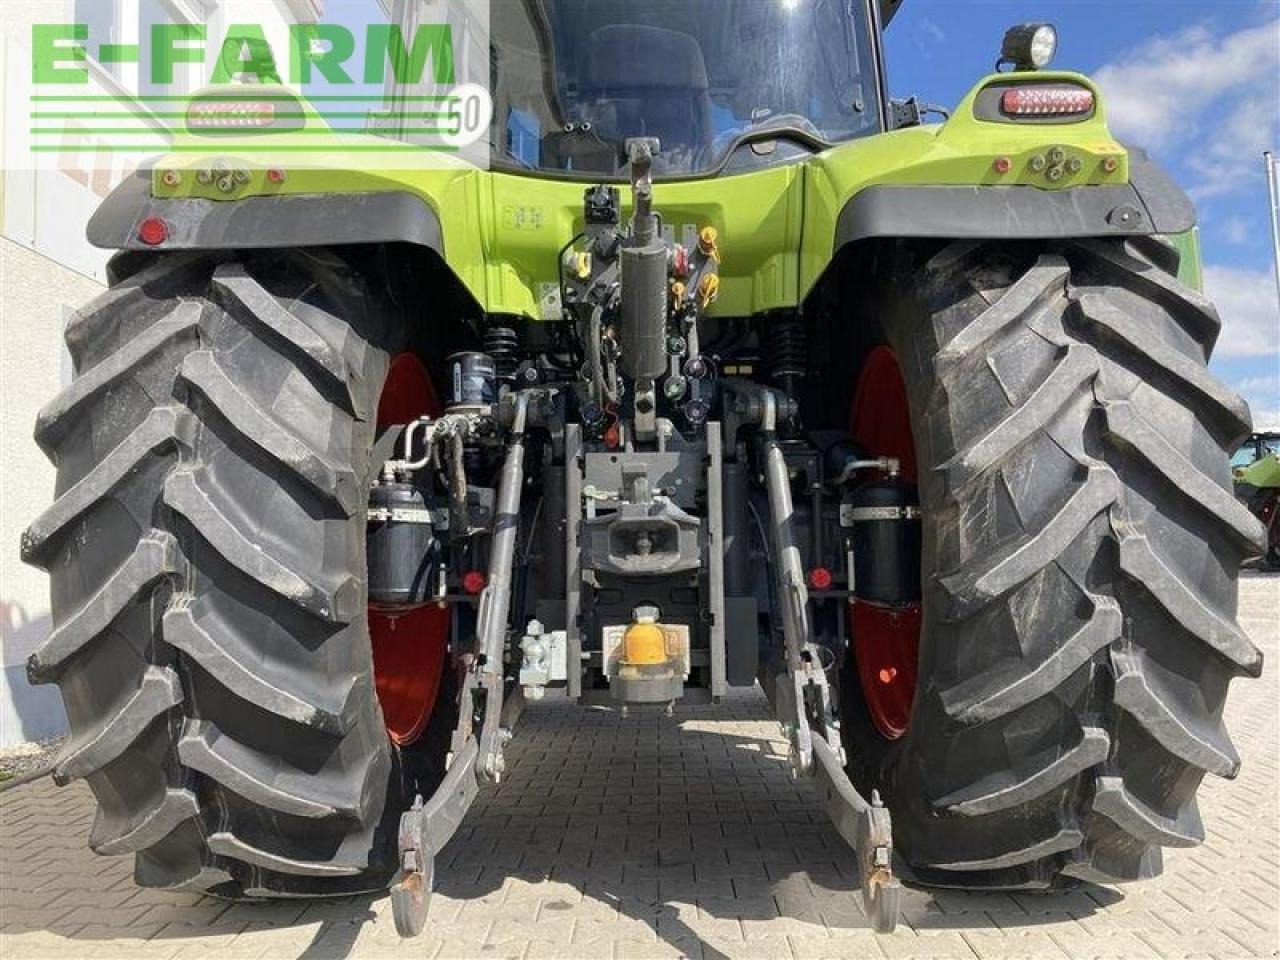 Farm tractor CLAAS arion 660 cmatic st5 cebis